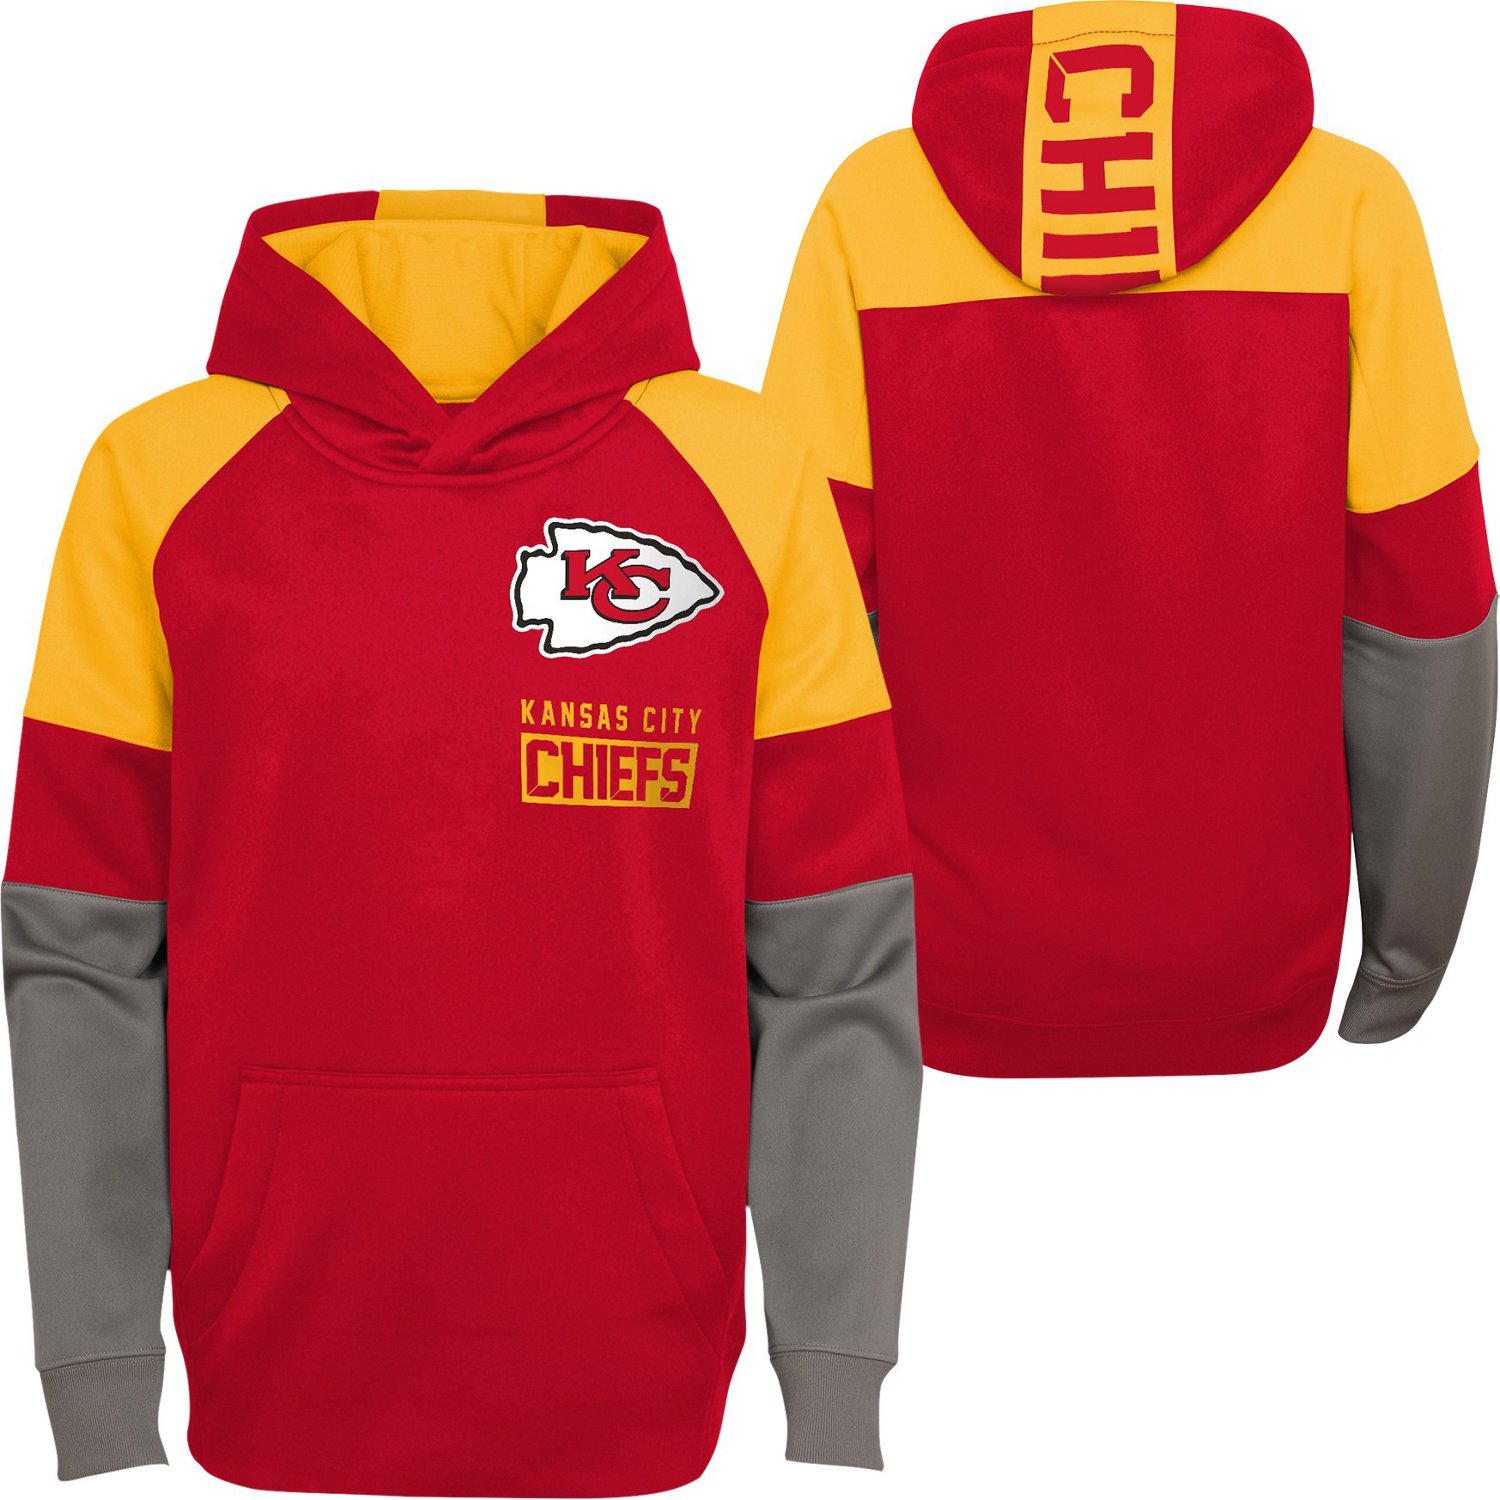 Kansas City Chiefs Football Hoodie Sweatshirt Jacket Coat Top Gifts to Fans 